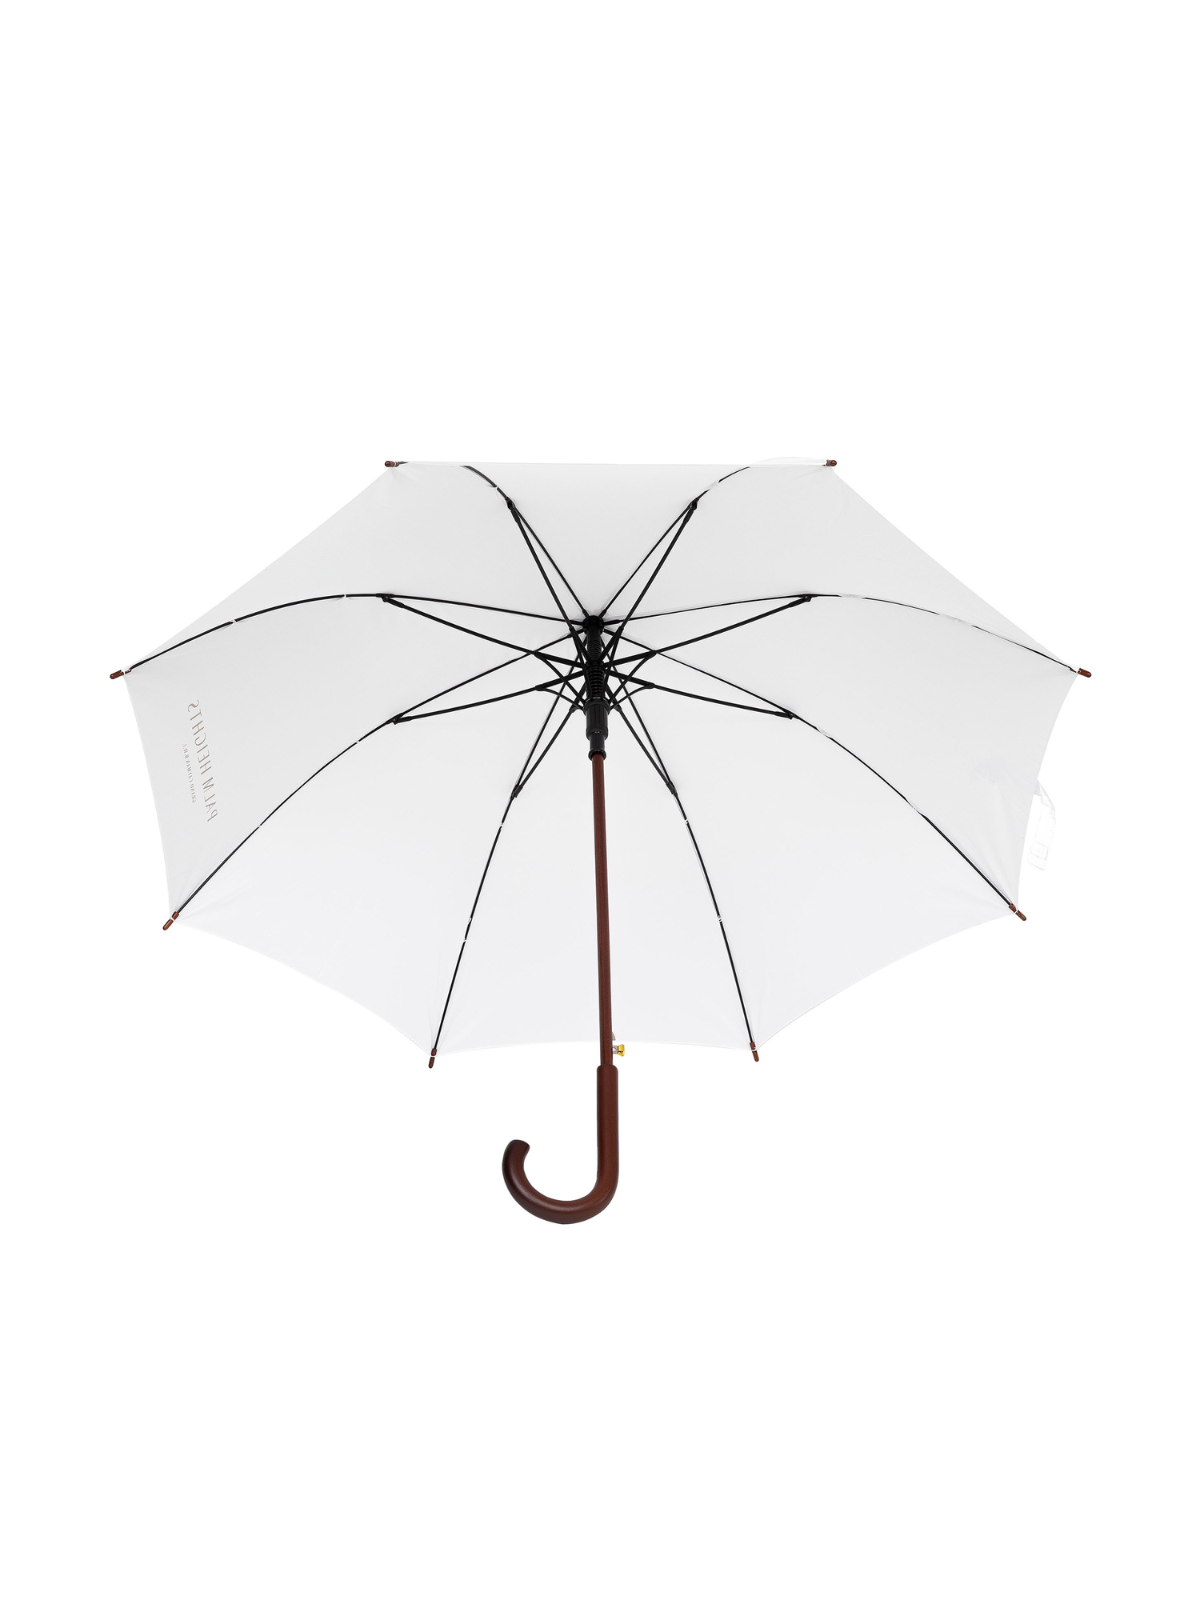 Palm Heights umbrella